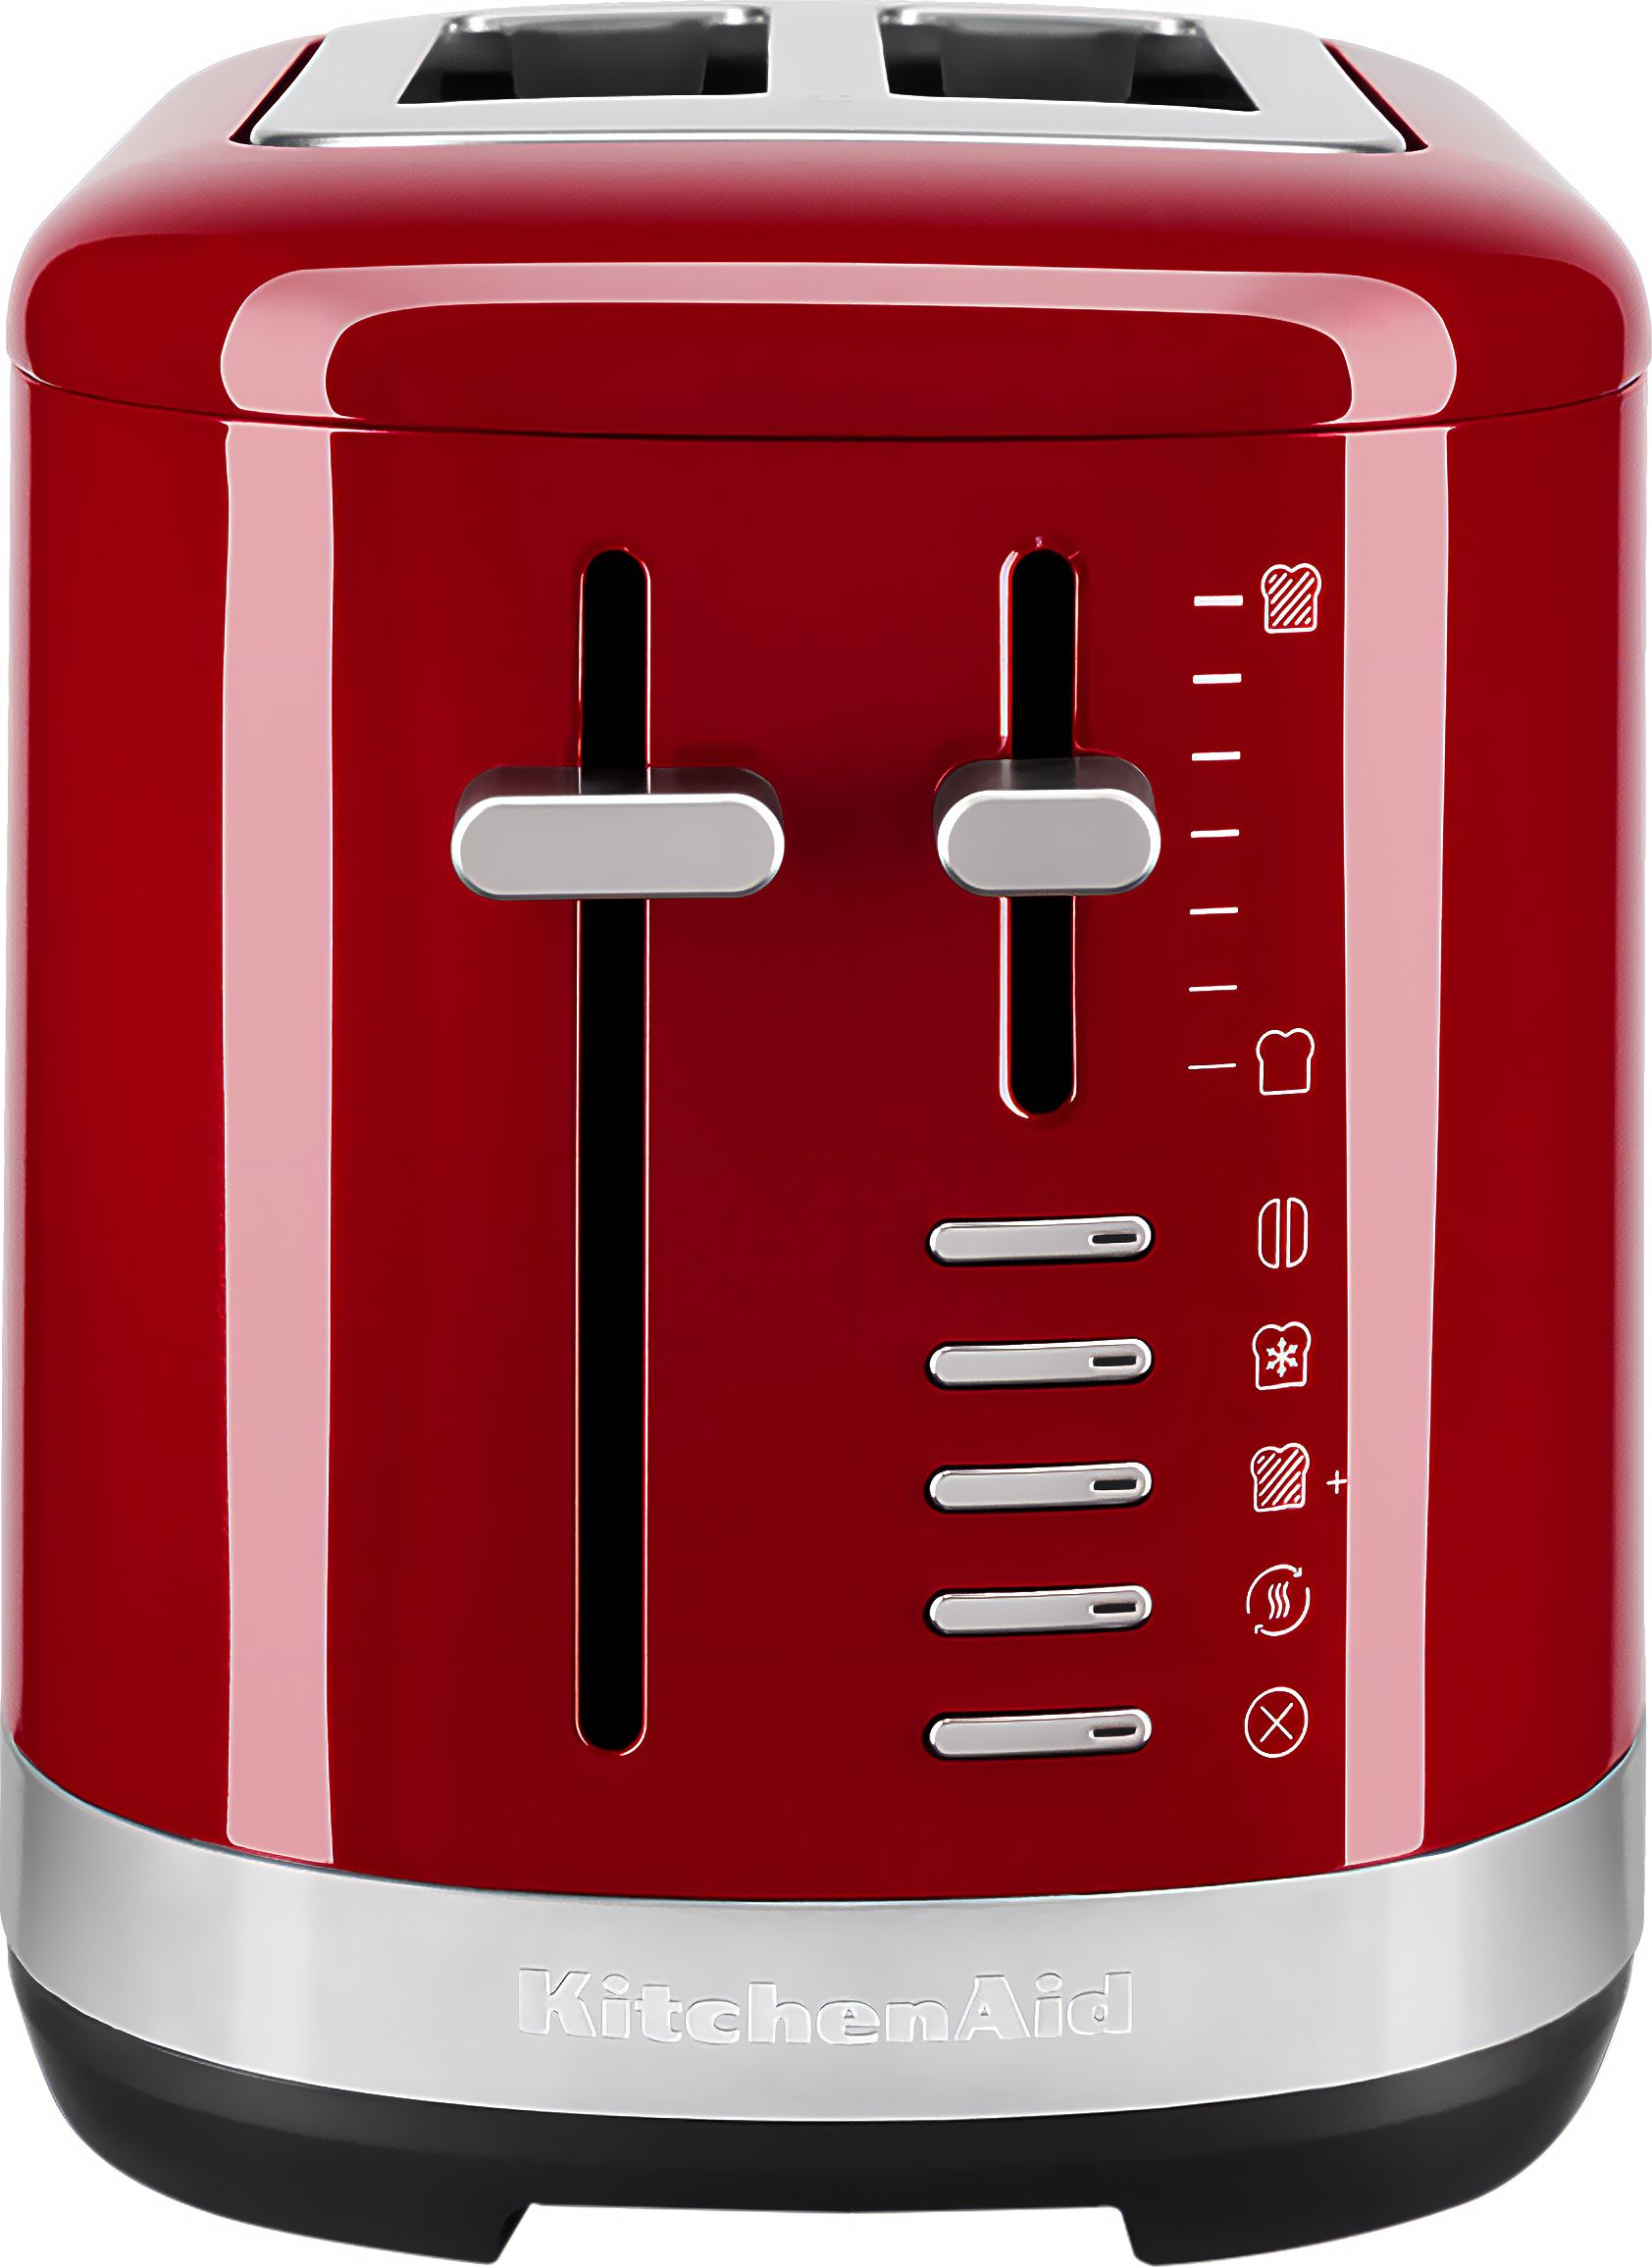 KitchenAid 5KMT2109BER 2 Slice Toaster - Empire Red, Red